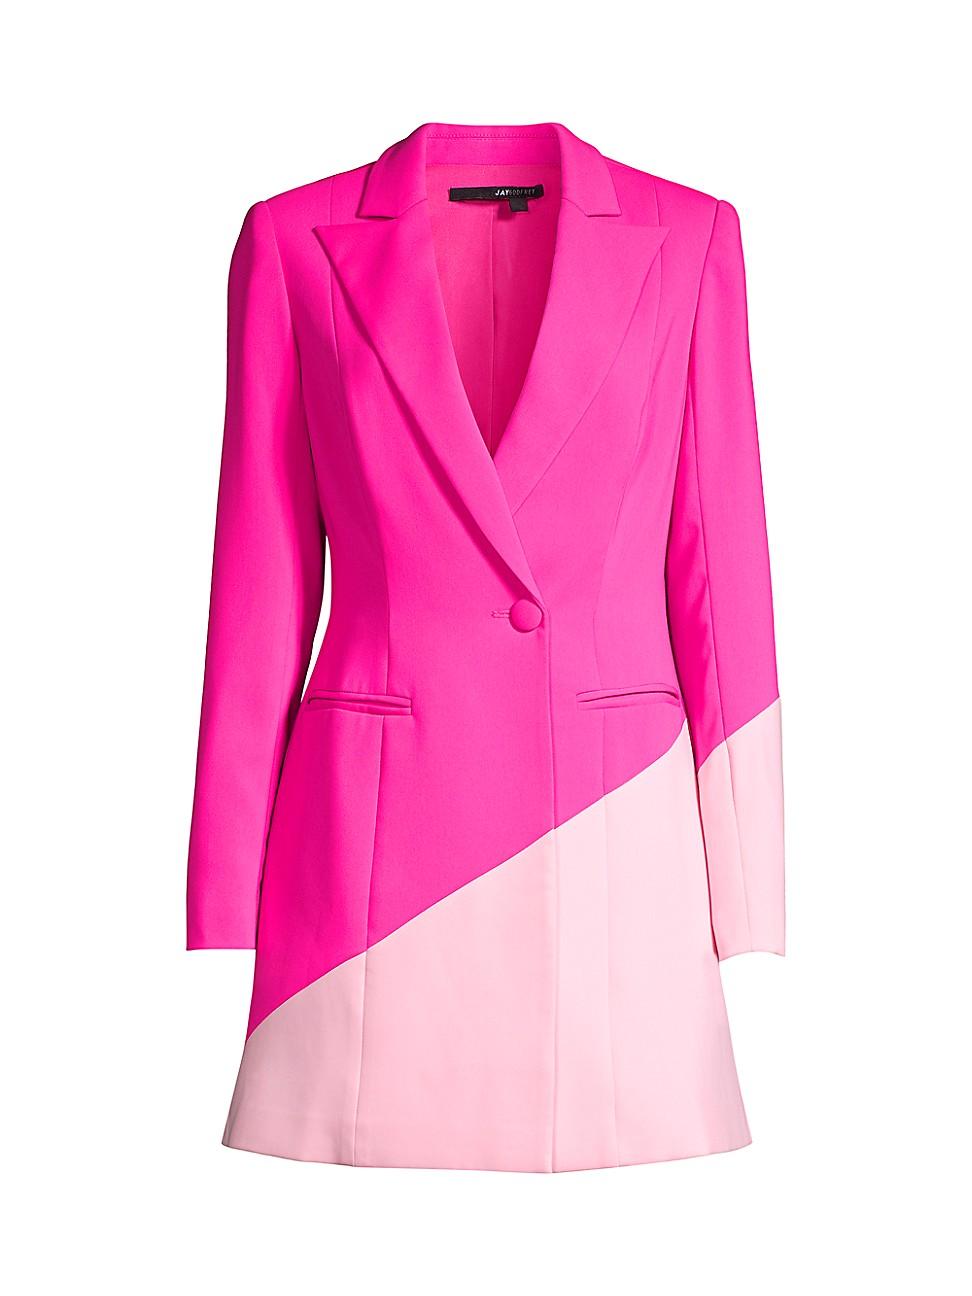 Jay Godfrey Ace Bright Blazer Dress in Pink | Lyst